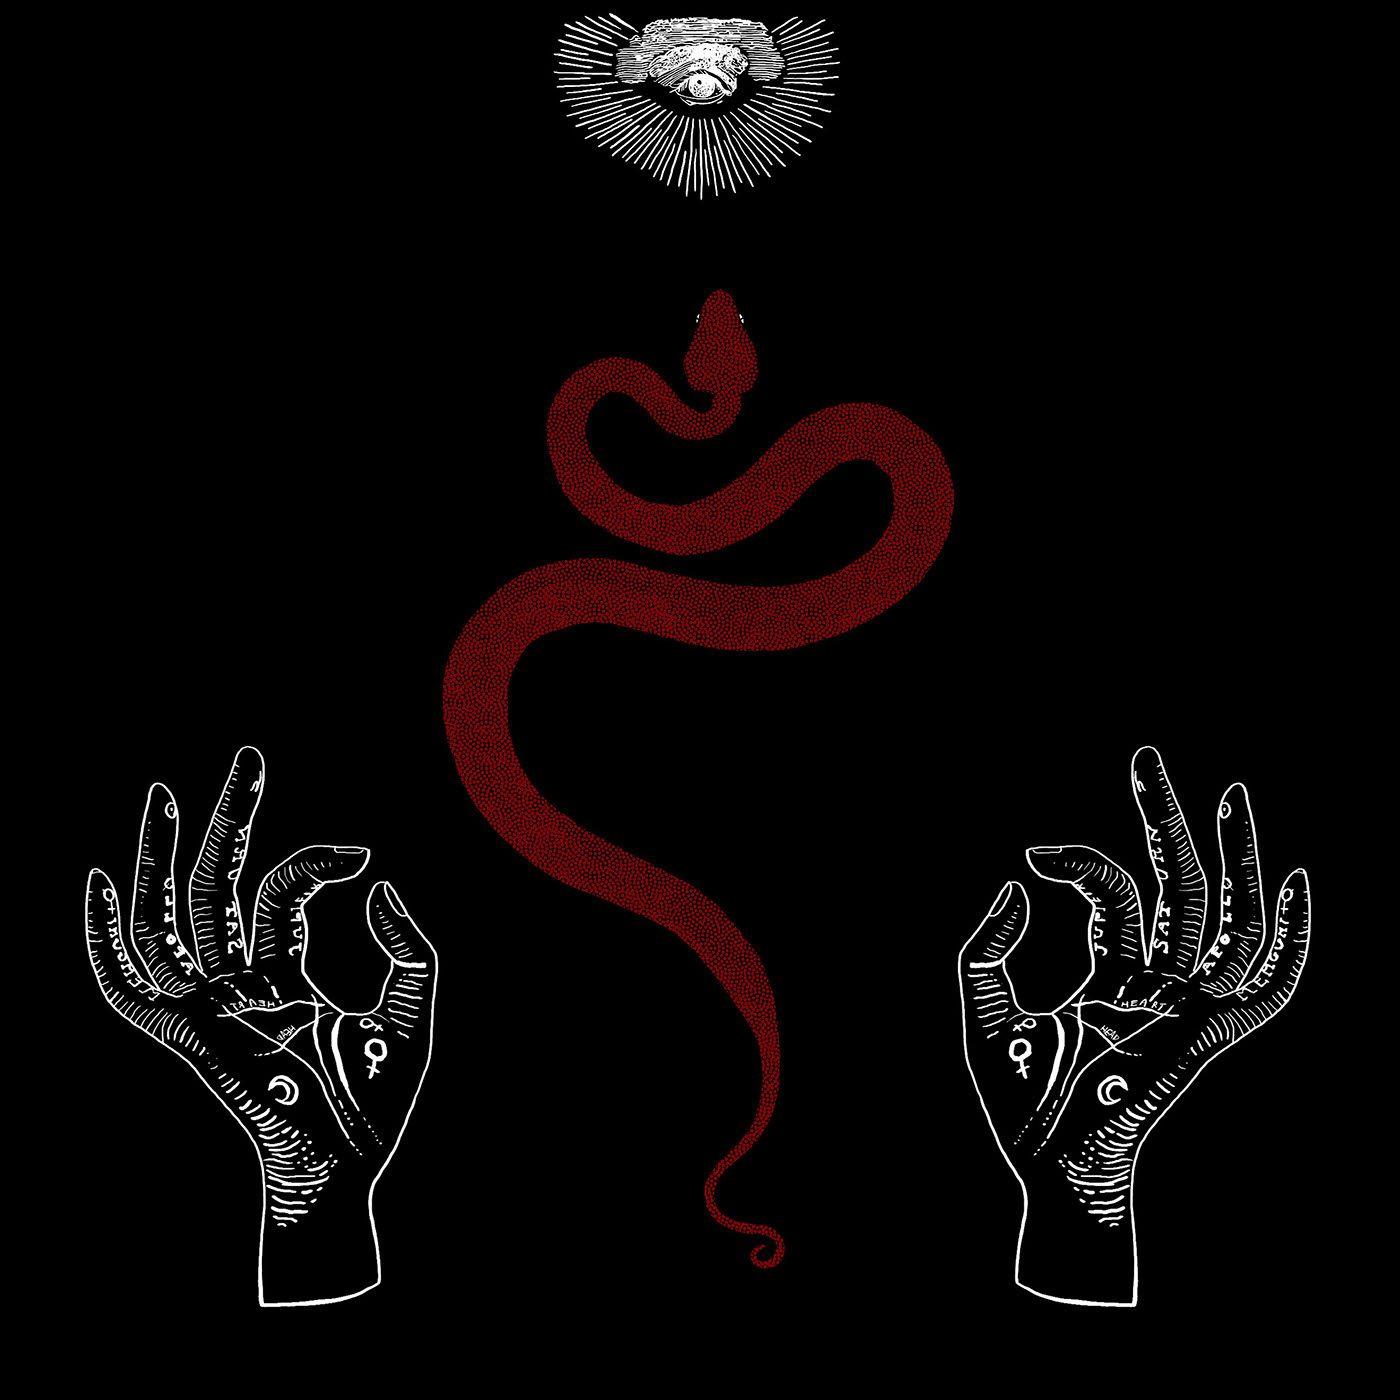 Occult Logo - Occult Symbols Illustration on Behance